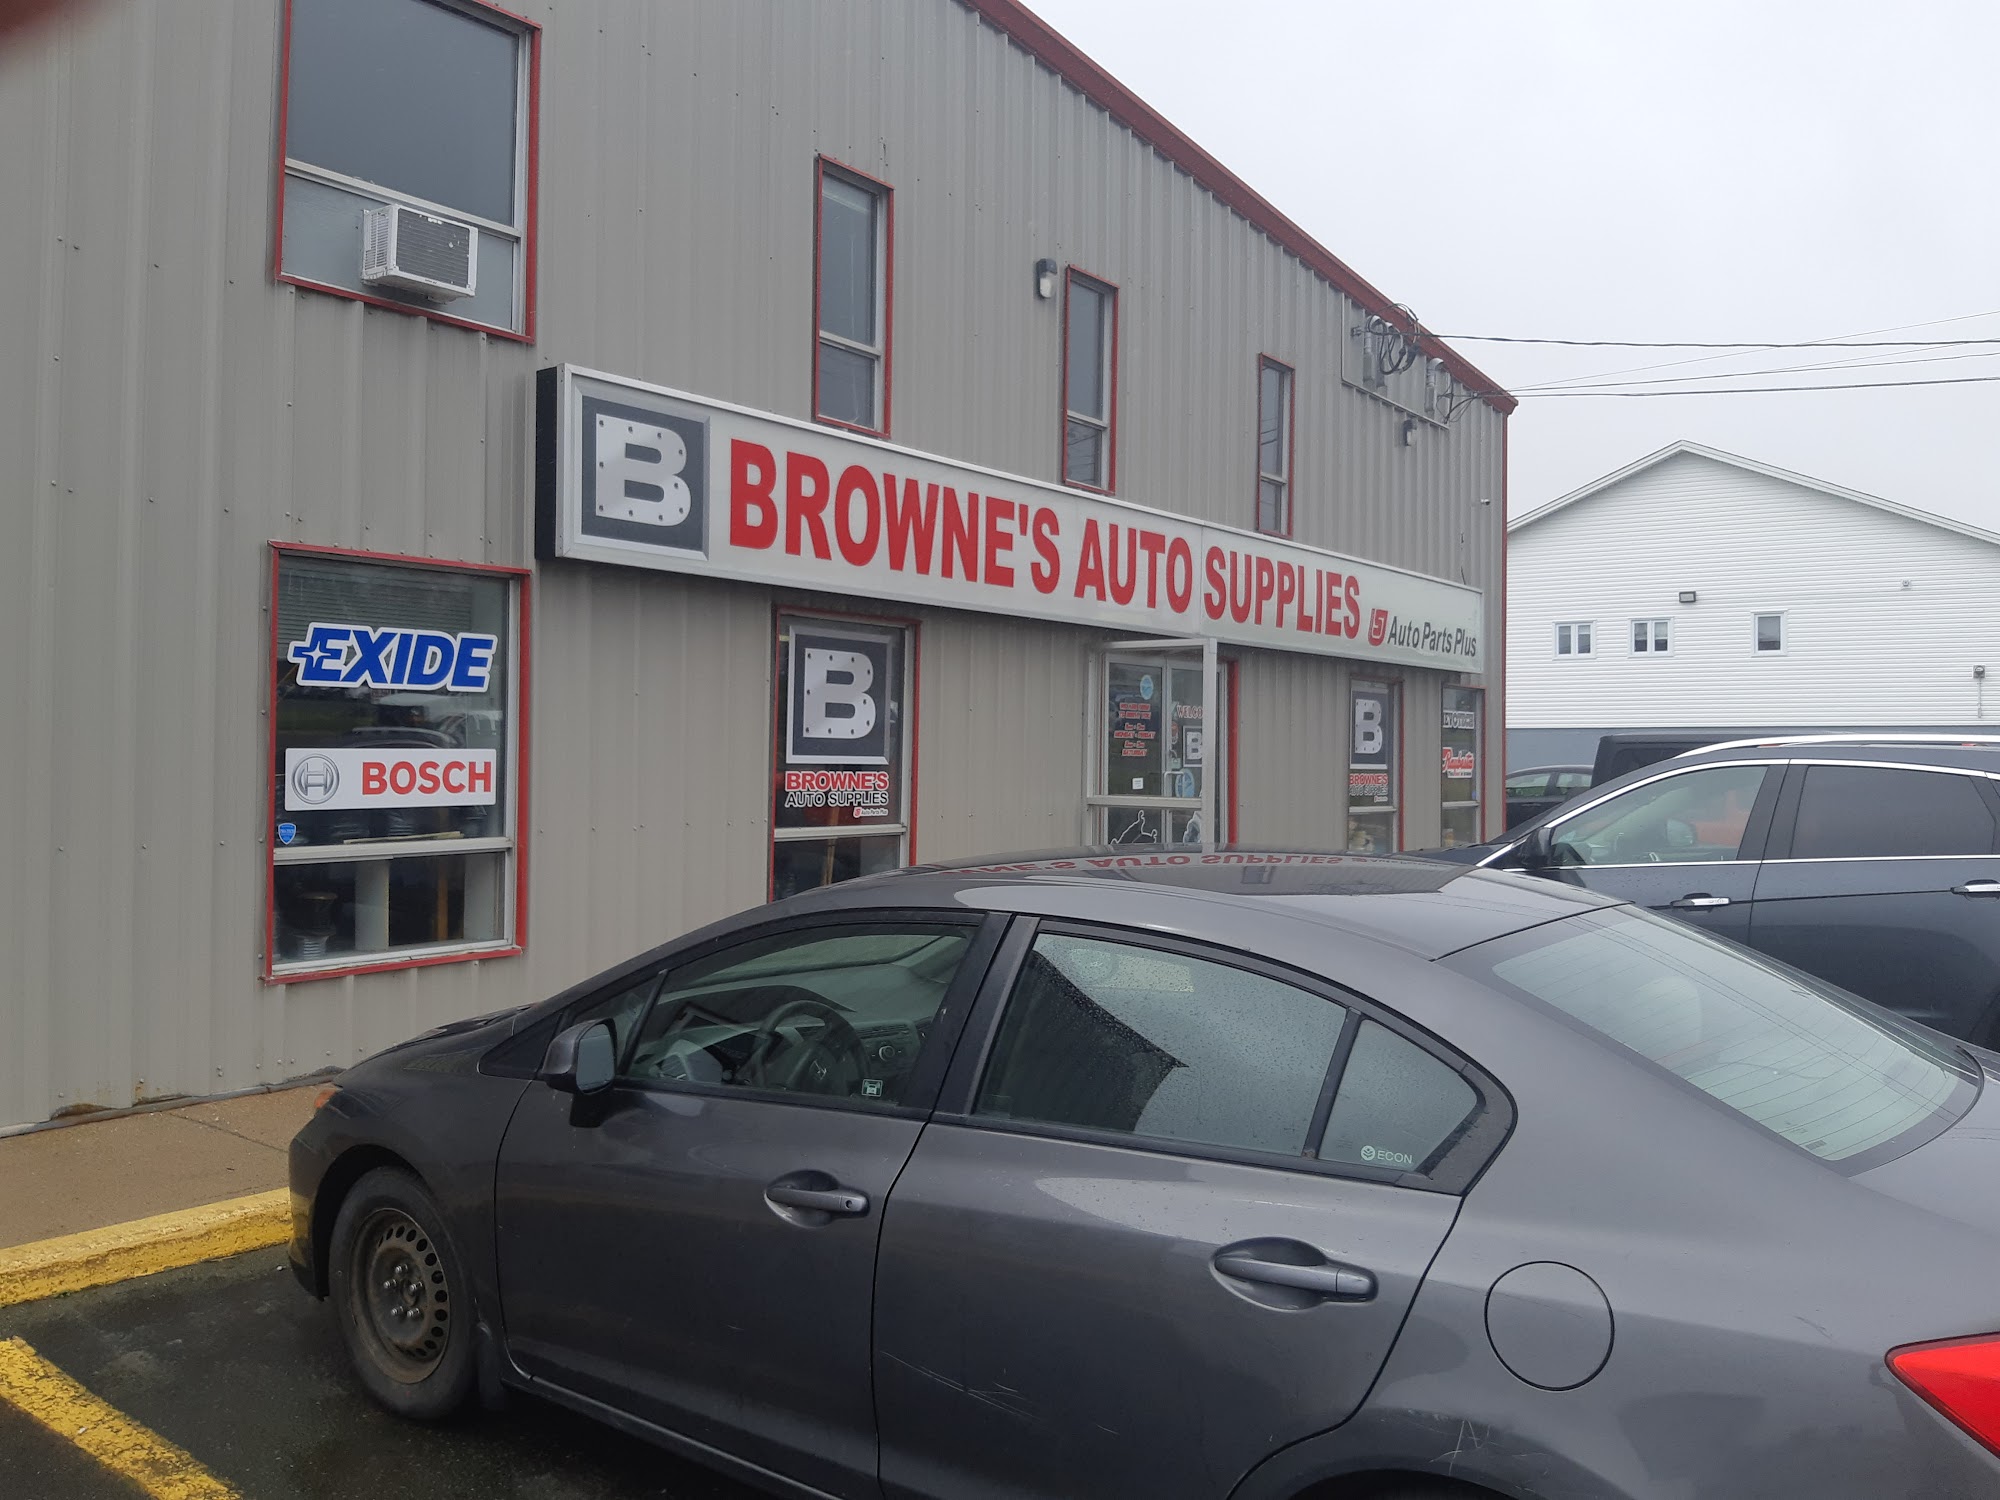 Browne's Auto Supplies